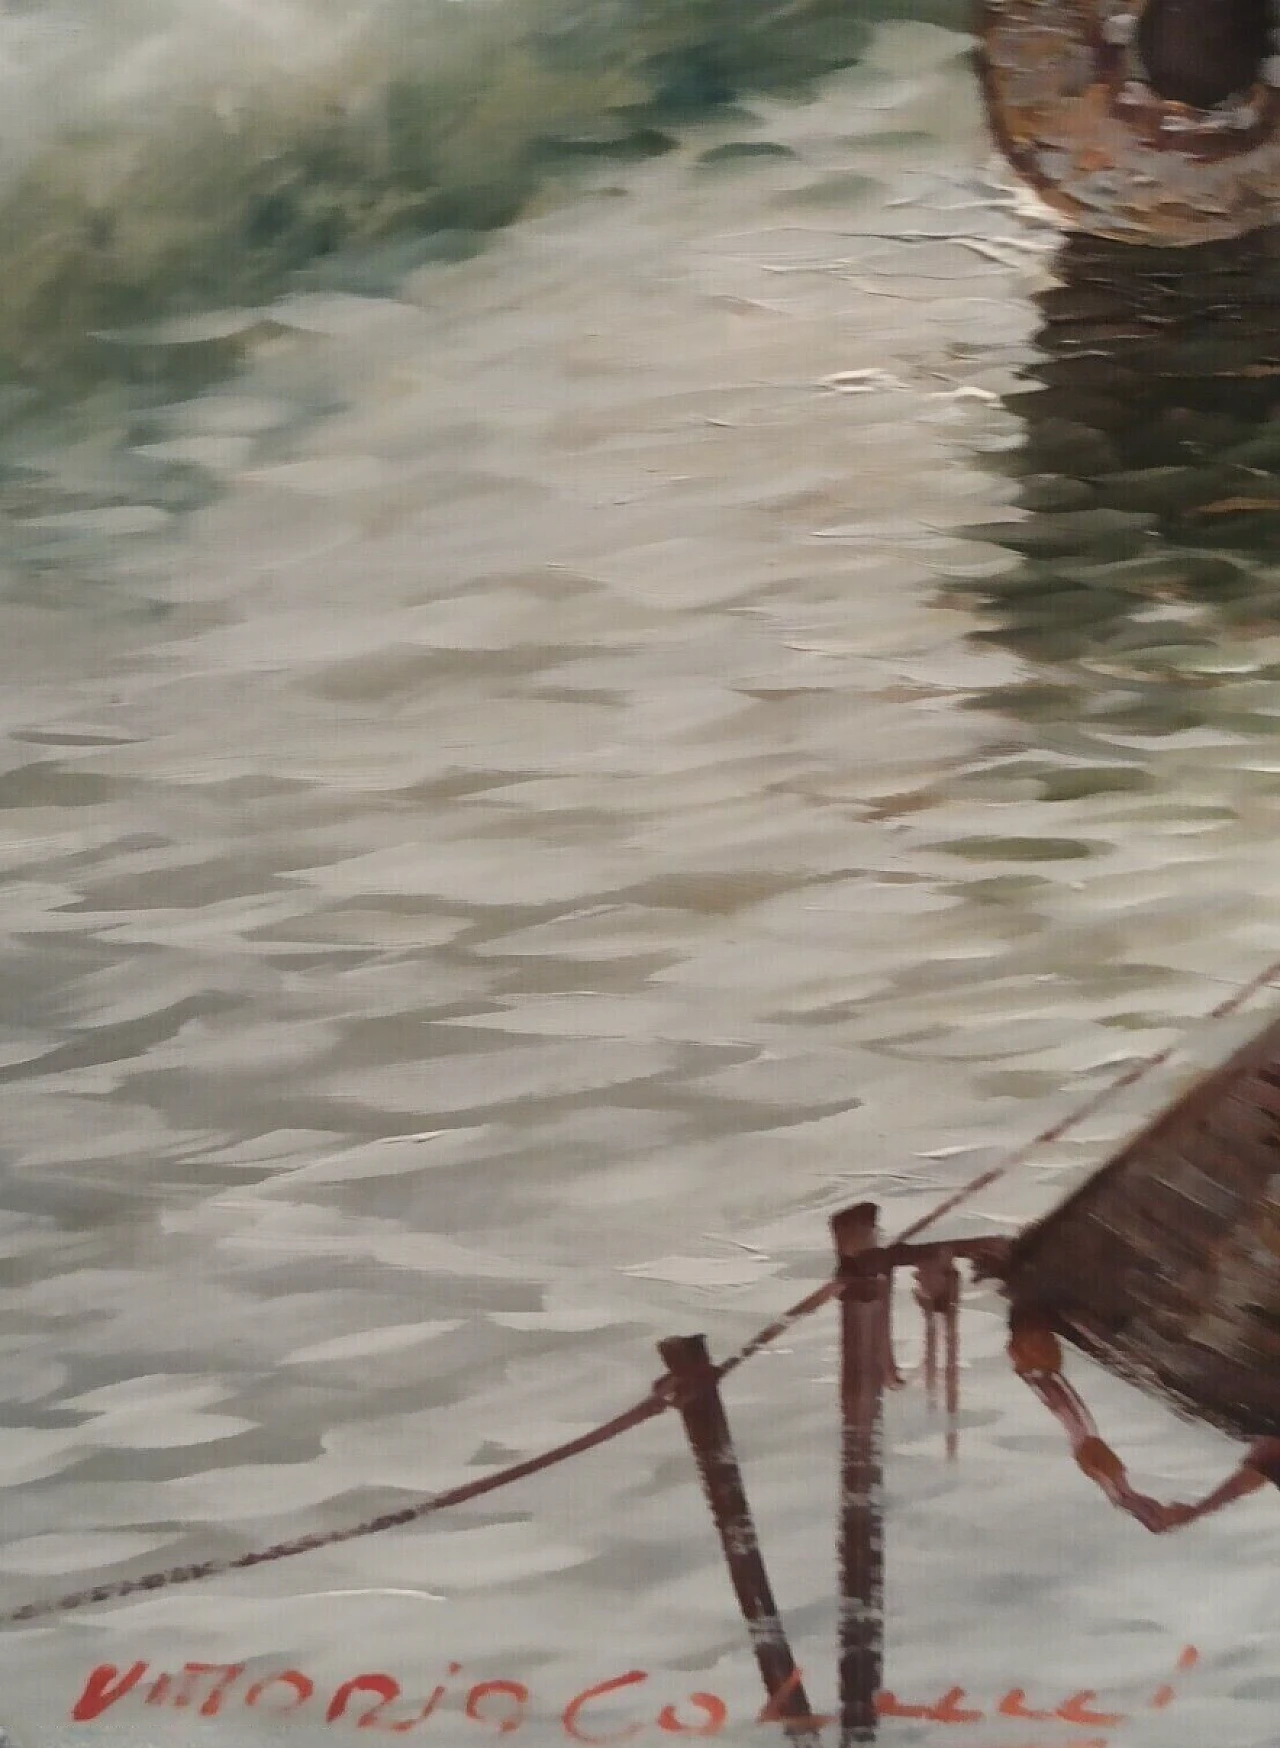 Vittorio Colucci, seascape, oil painting on canvas 13